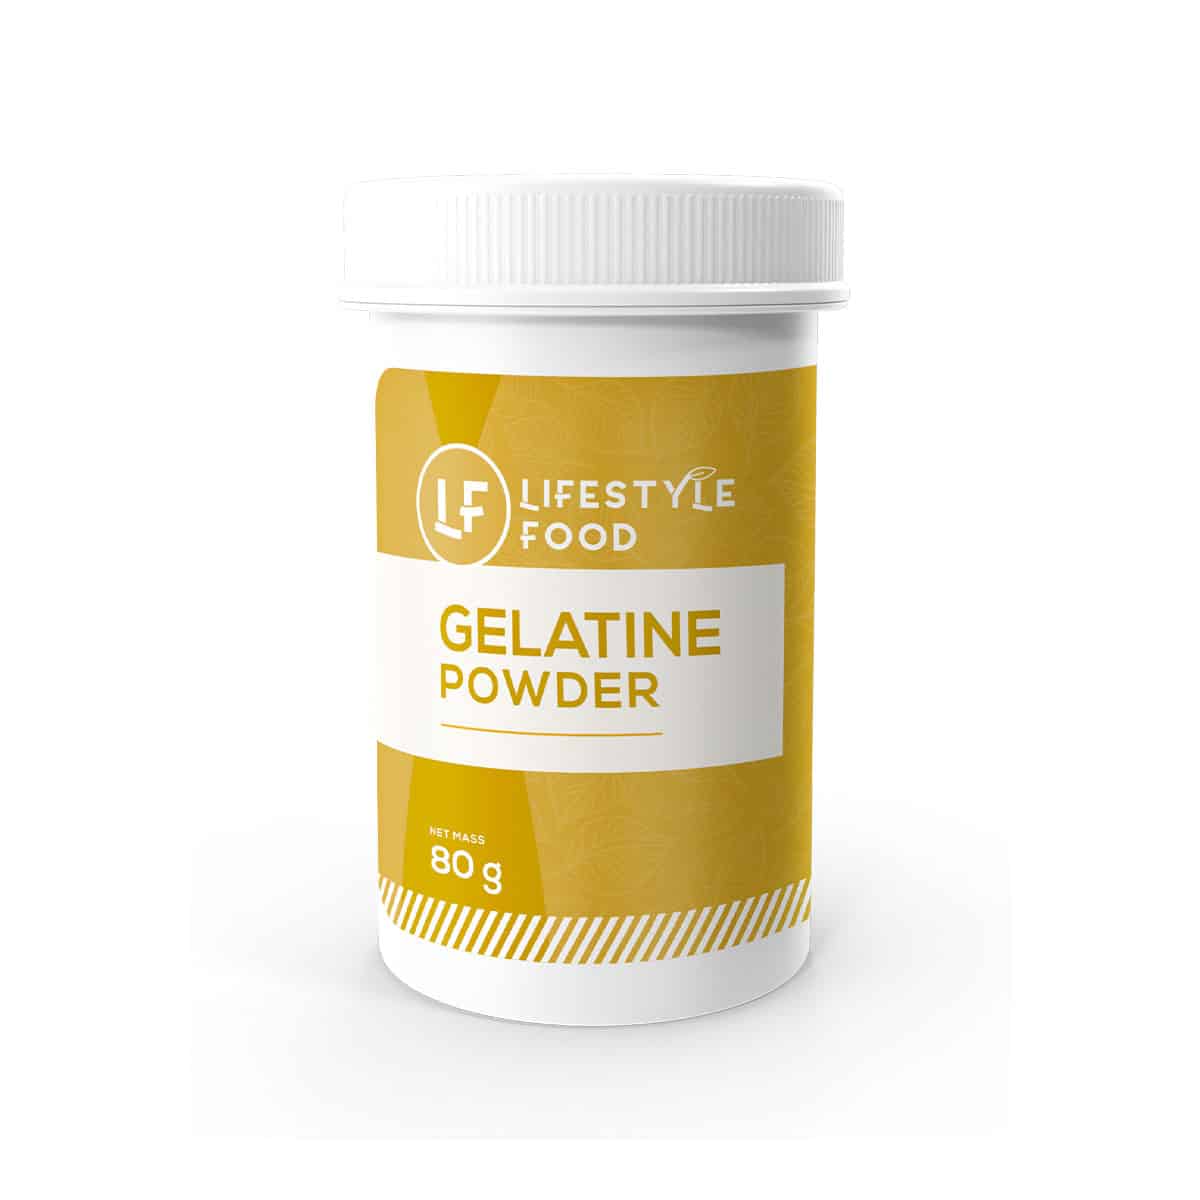 Lifestyle Food Gelatine Powder - 80g